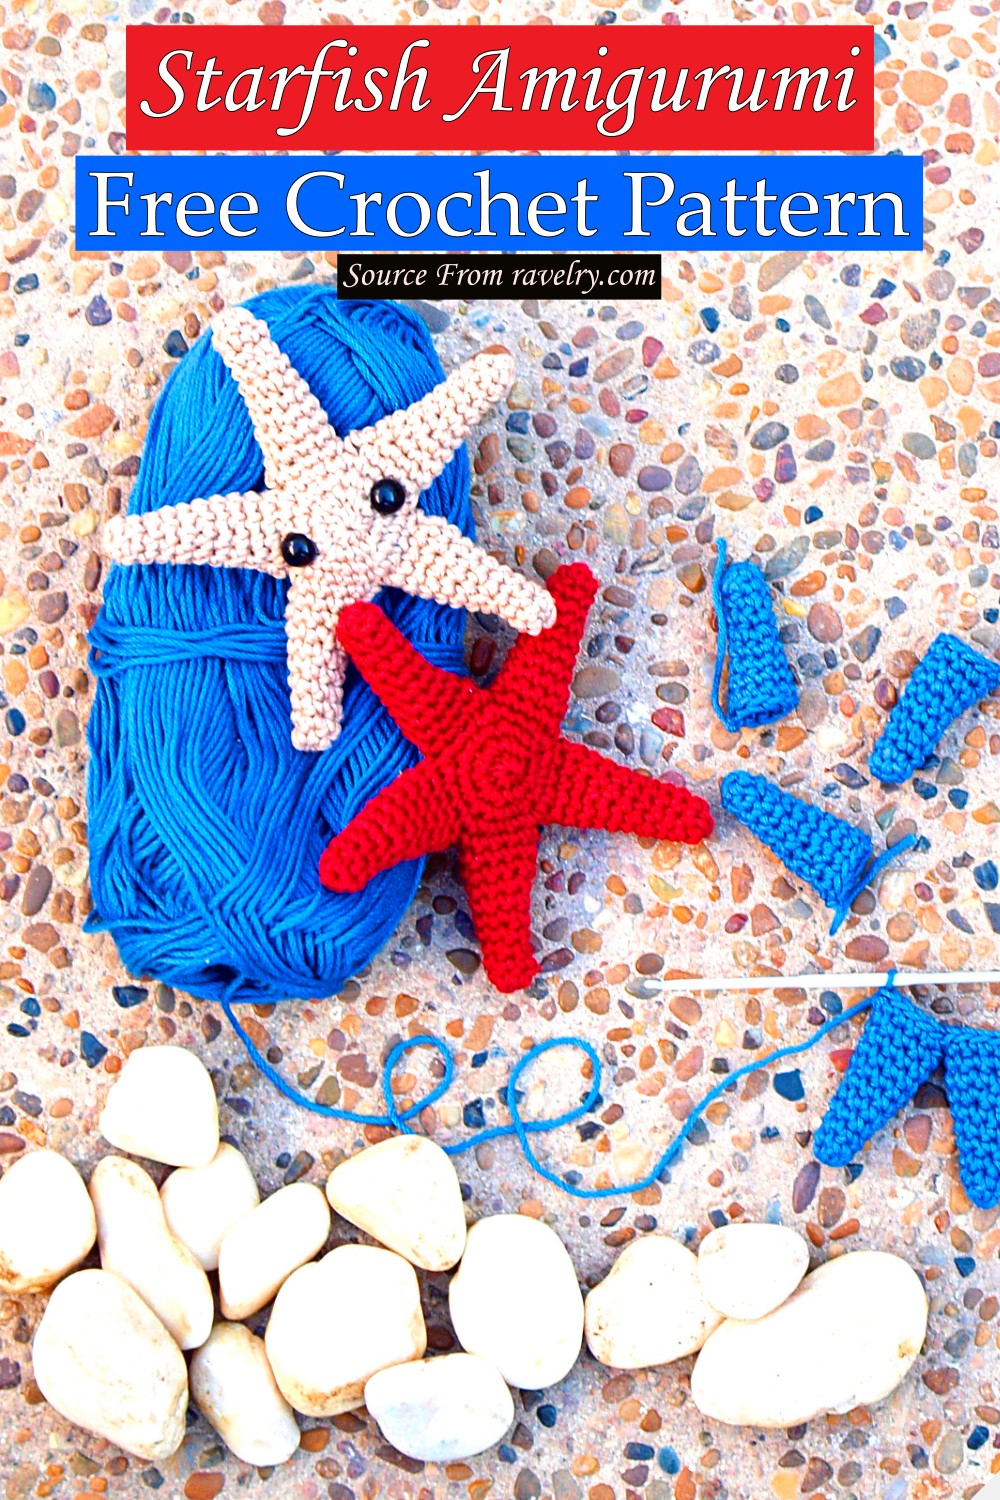 Free Crochet Starfish Amigurumi Pattern